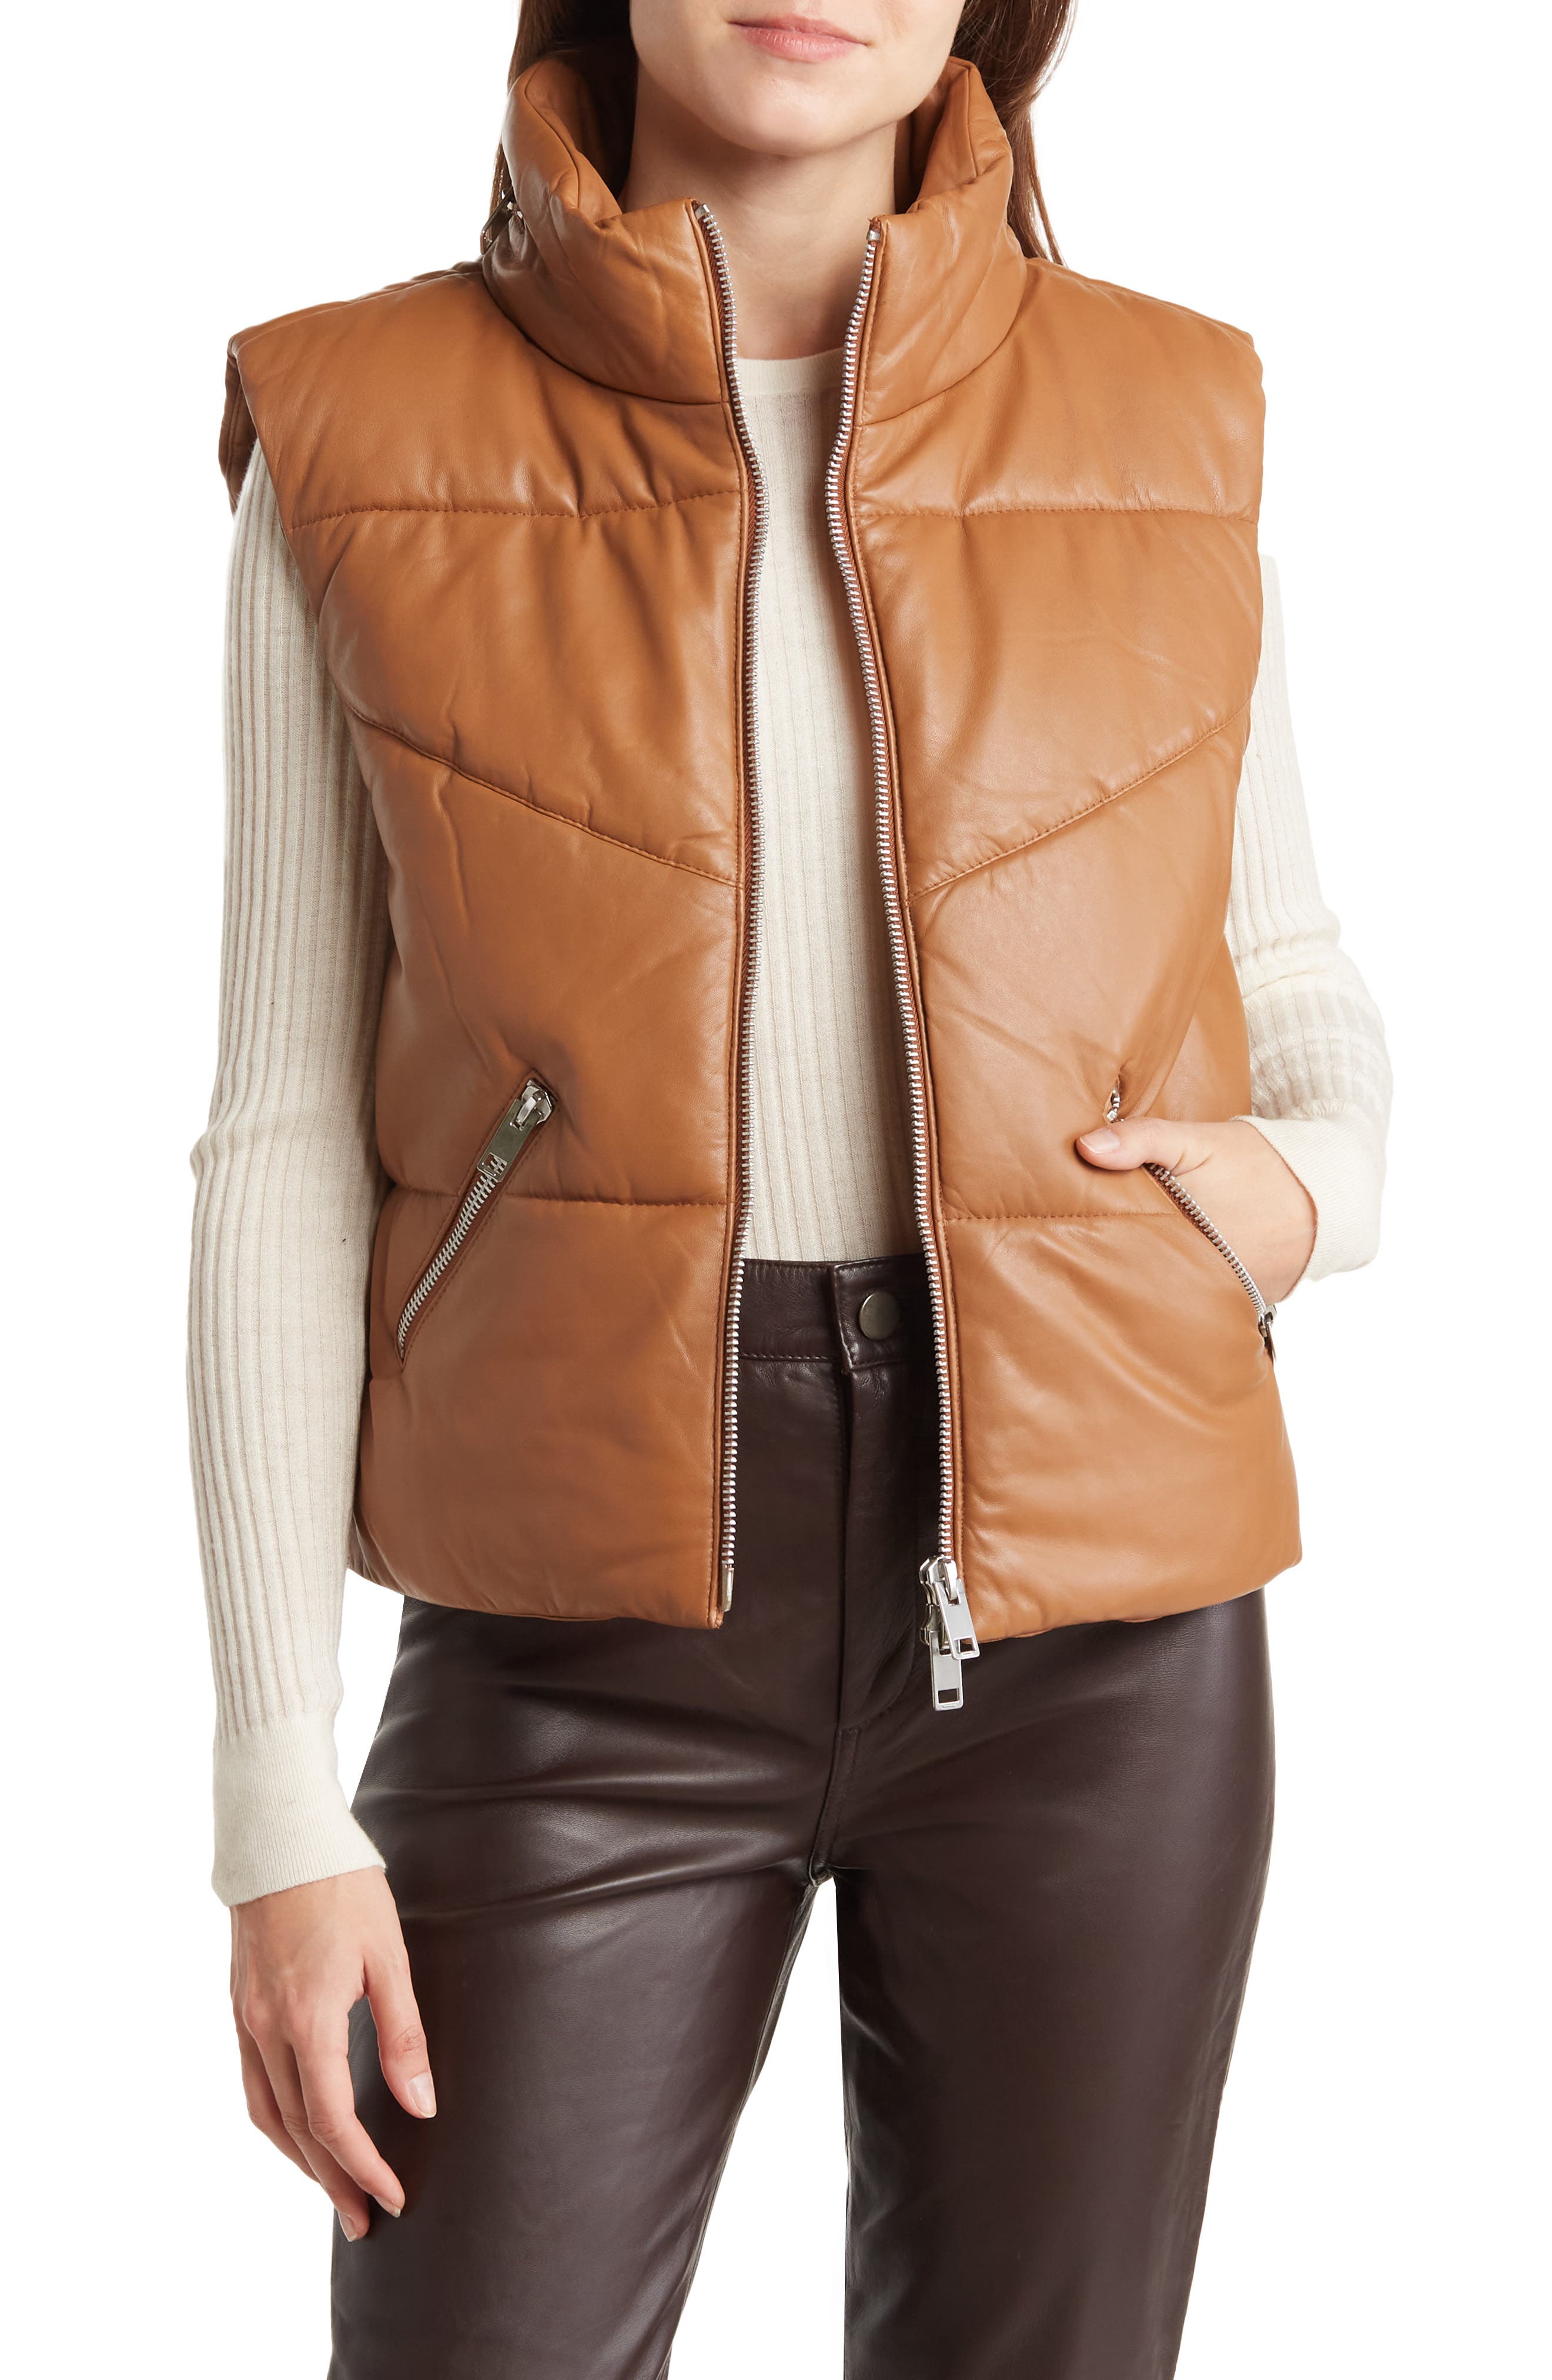 discount 63% FB Sister vest WOMEN FASHION Jackets Vest Knitted Beige M 